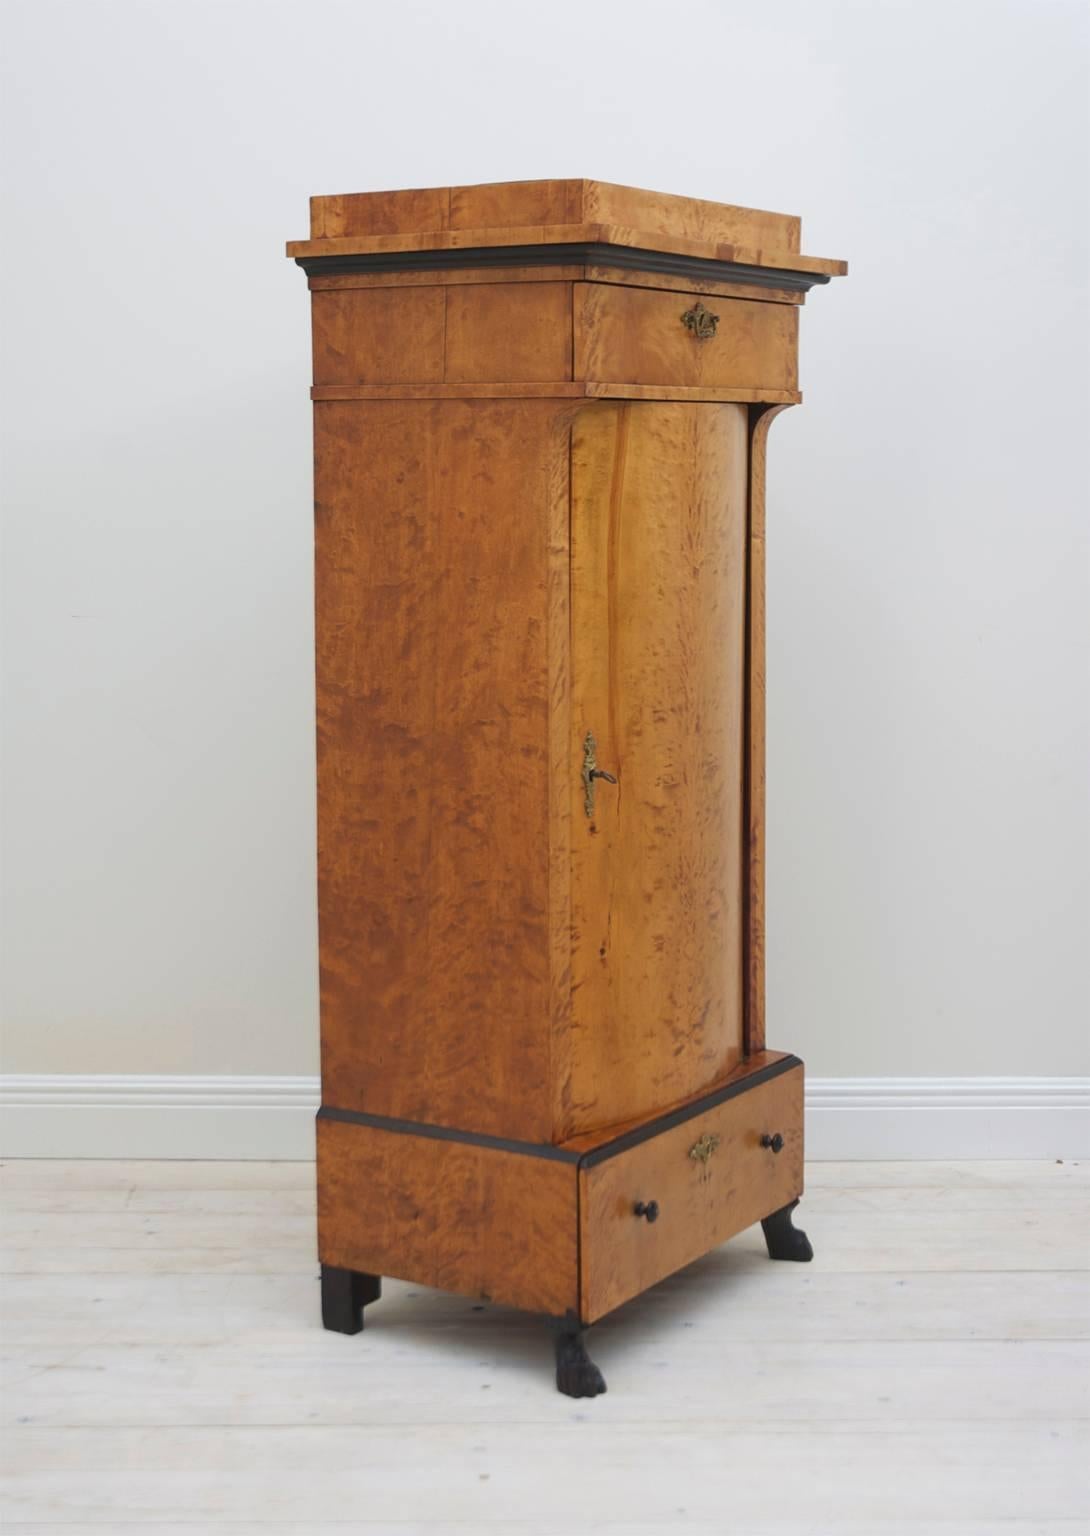 Ebonized Antique Swedish Empire Pedestal Cabinet in Polished Birch, circa 1810